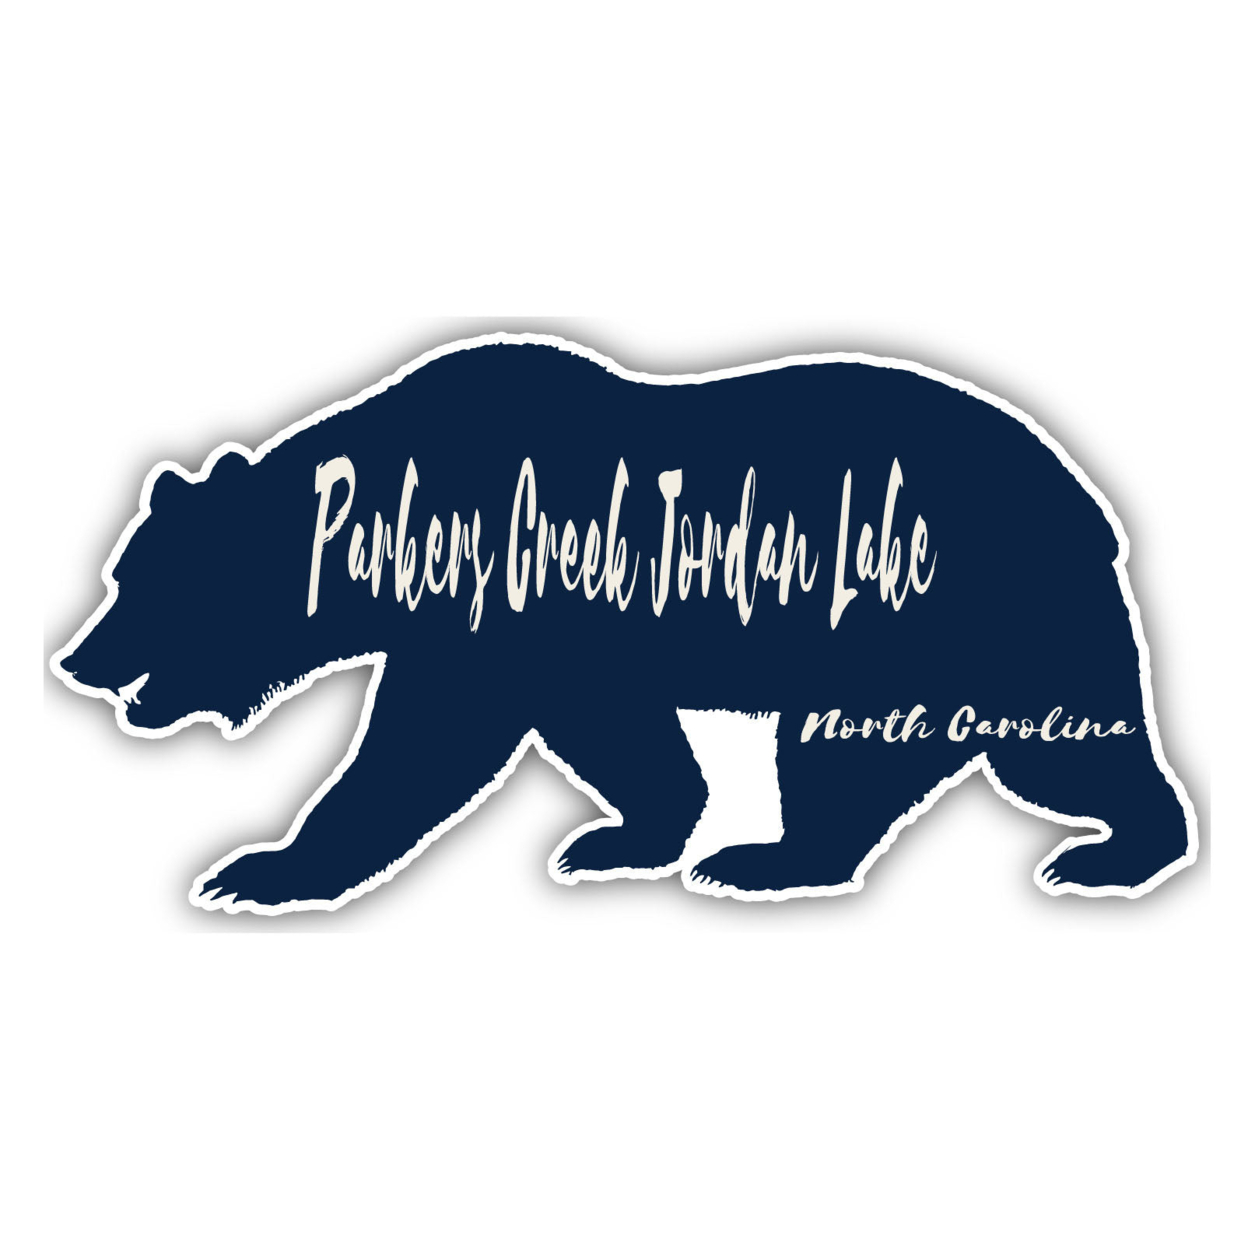 Parkers Creek Jordan Lake North Carolina Souvenir Decorative Stickers (Choose Theme And Size) - Single Unit, 4-Inch, Bear